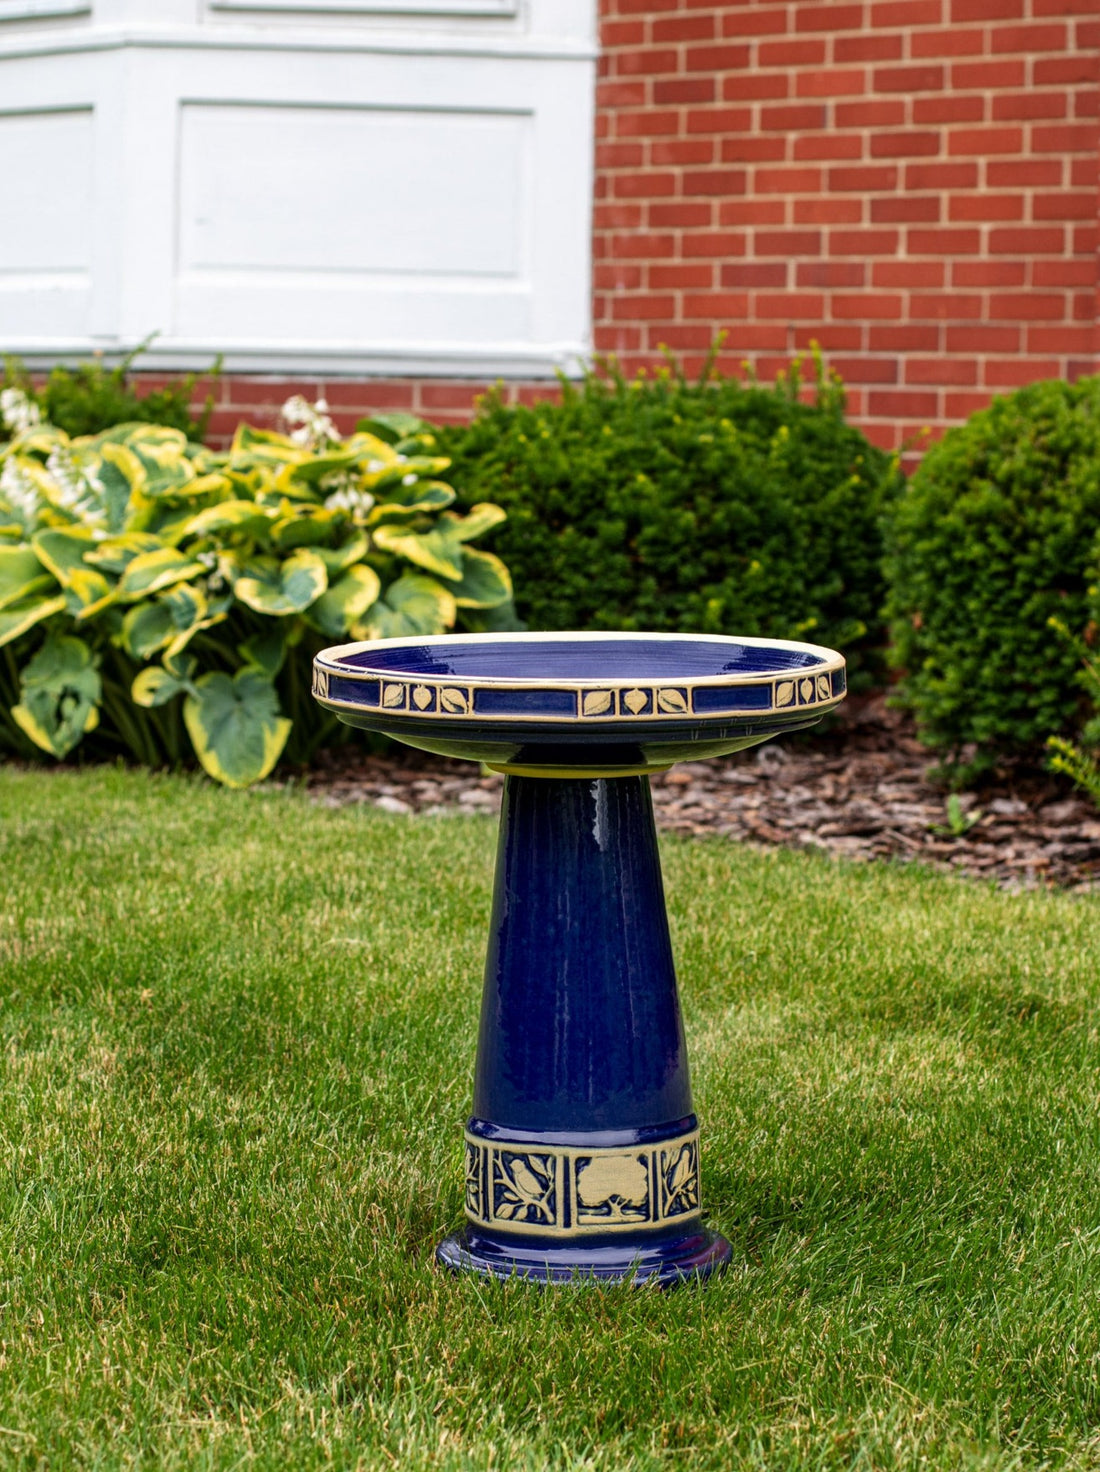 Ceramic Blue birdbath set with tan tree leaf and bird design in a landscaped garden area